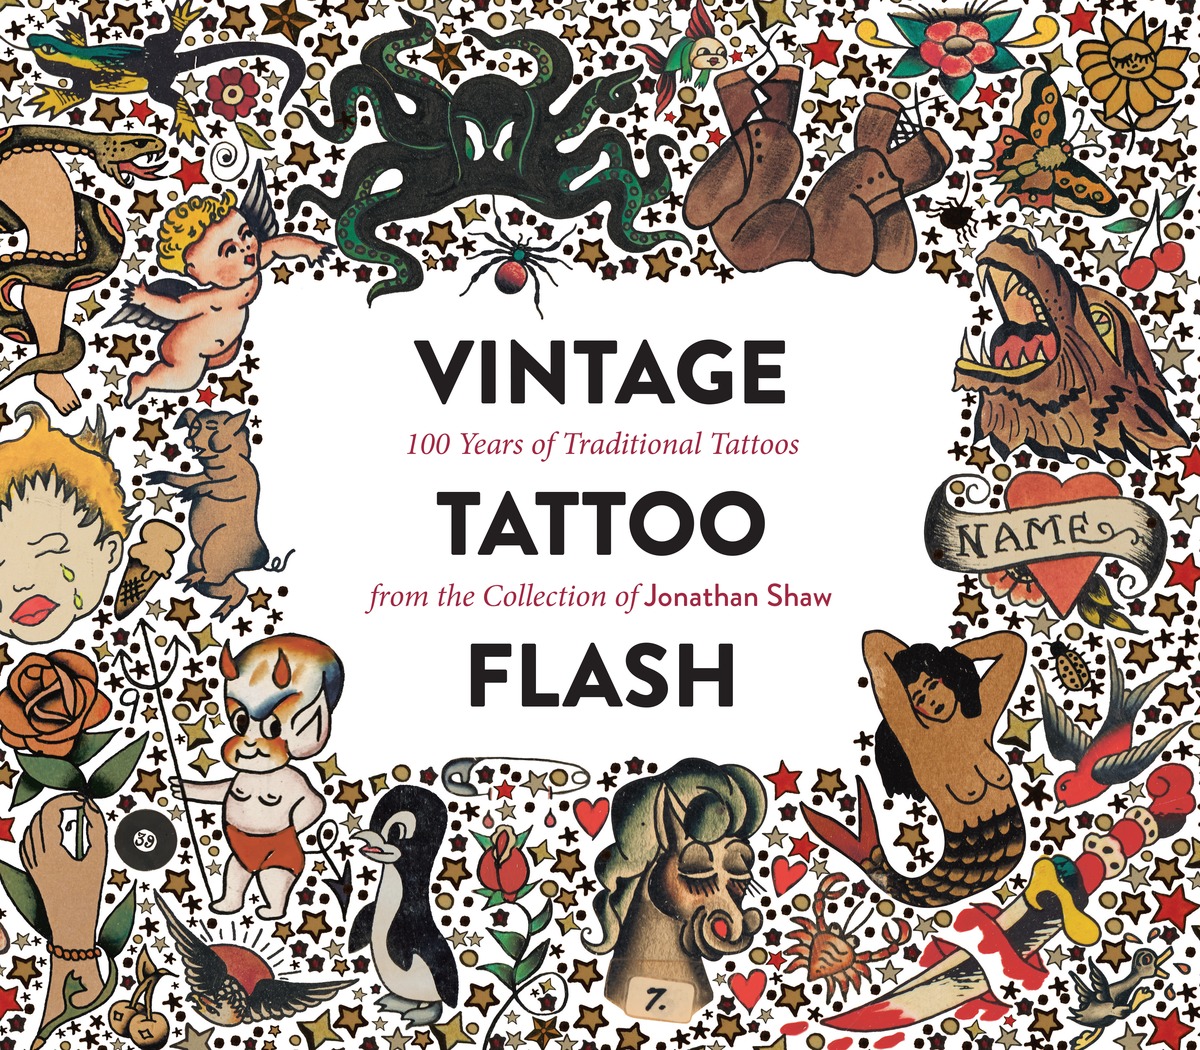 schending stof in de ogen gooien Besmettelijke ziekte Vintage Tattoo Flash: 100 Years of Traditional Tattoos from the Collection  of Jonathan Shaw - powerHouse Books